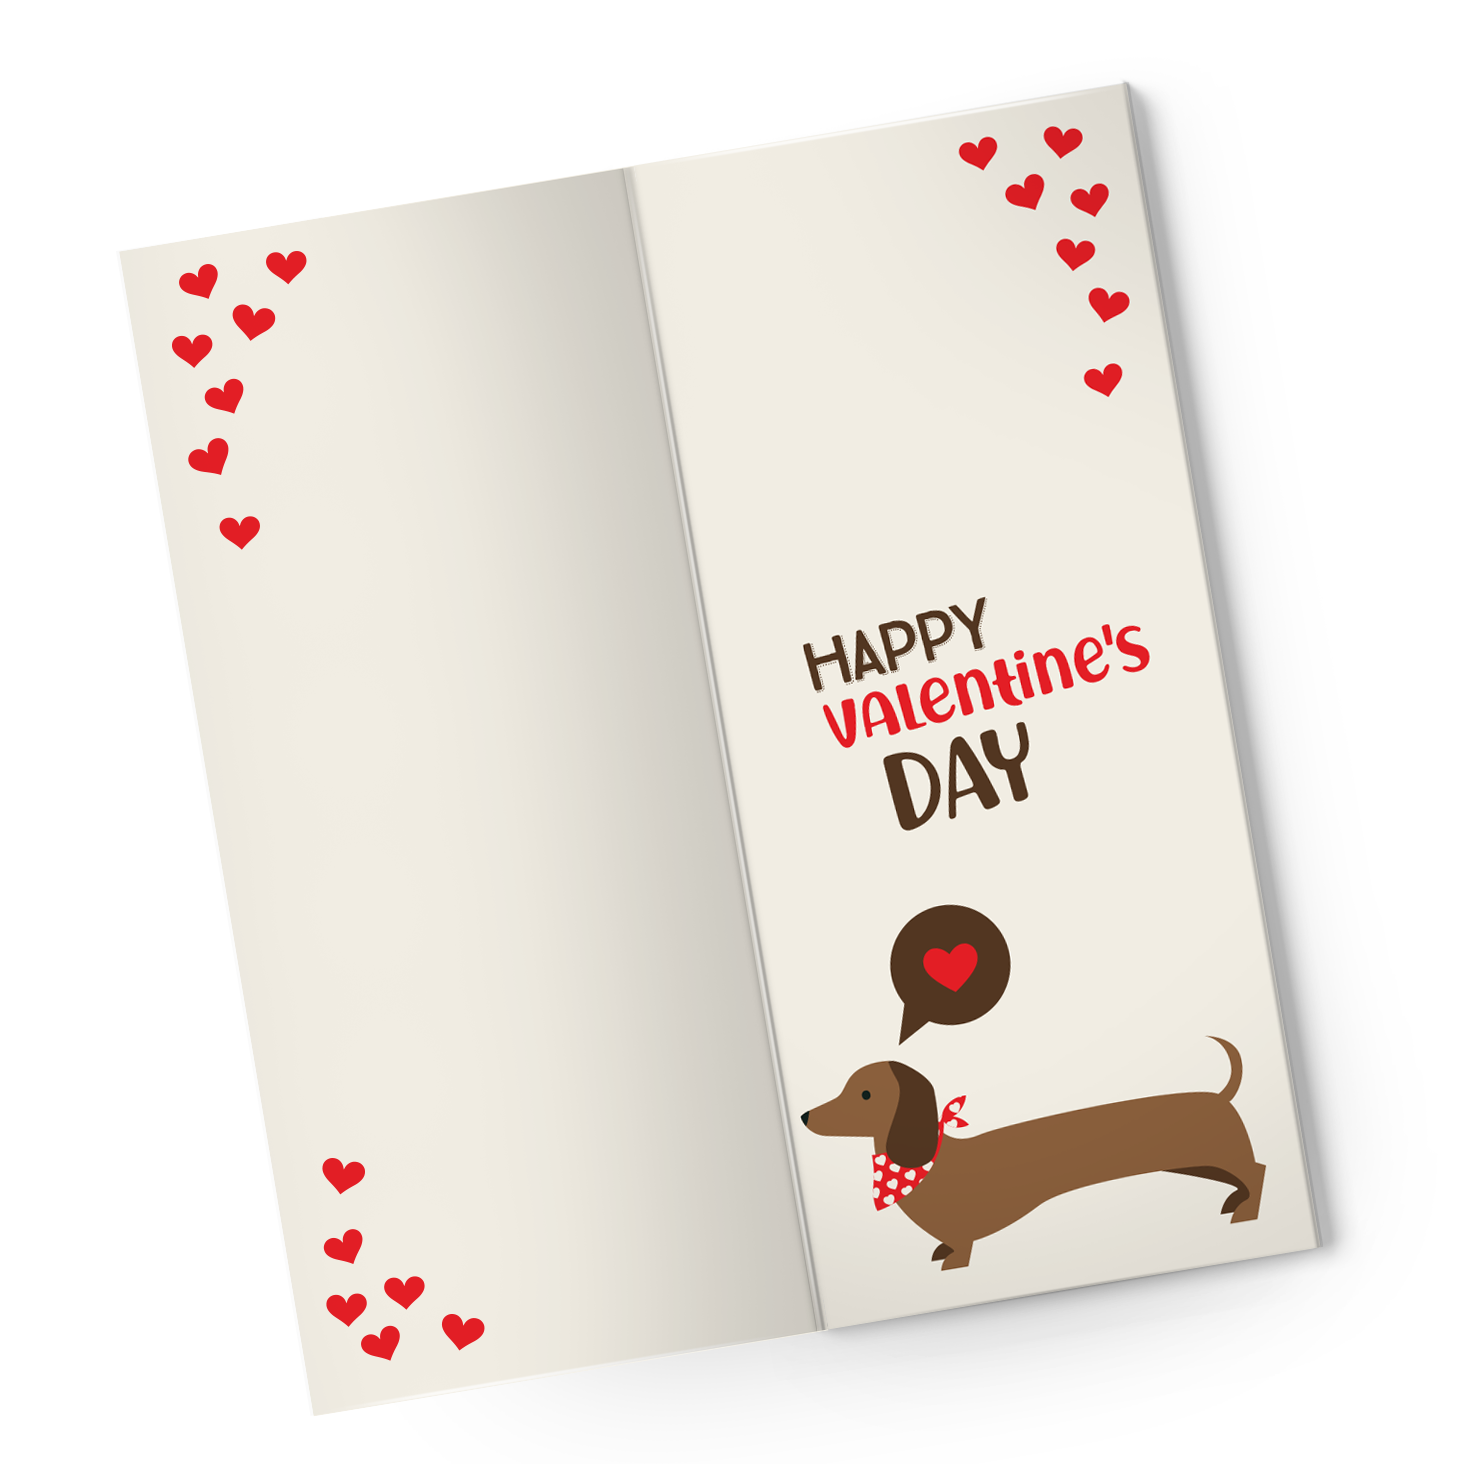 Valentine's Day Chocolate Card: "I Love You SoOoO Much"